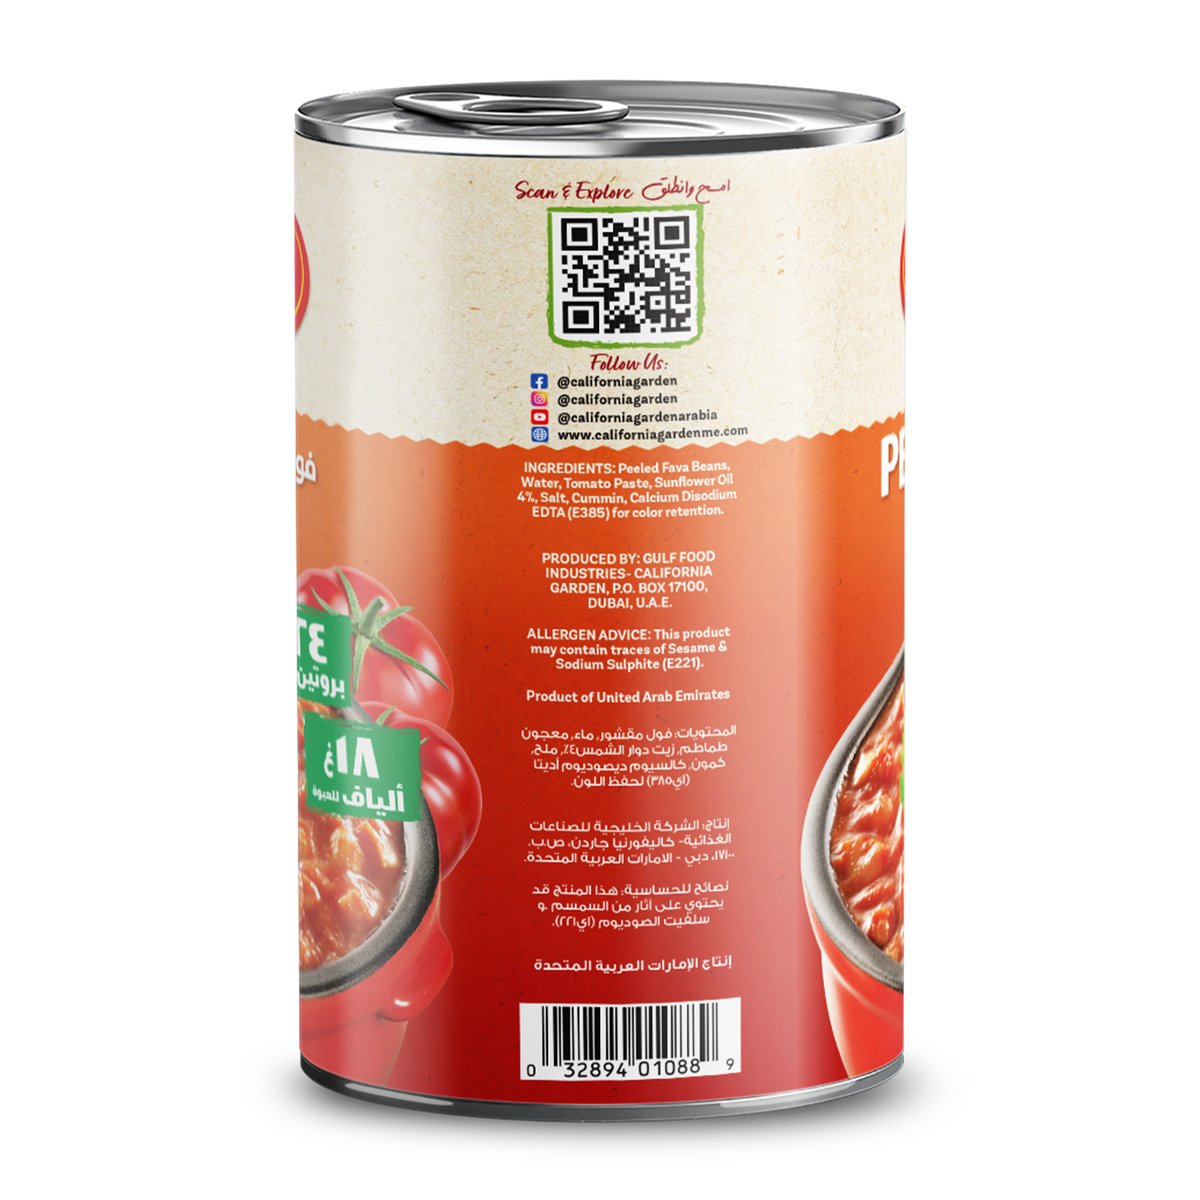 California Garden Canned Peeled Fava Beans Secret Recipe 450 g